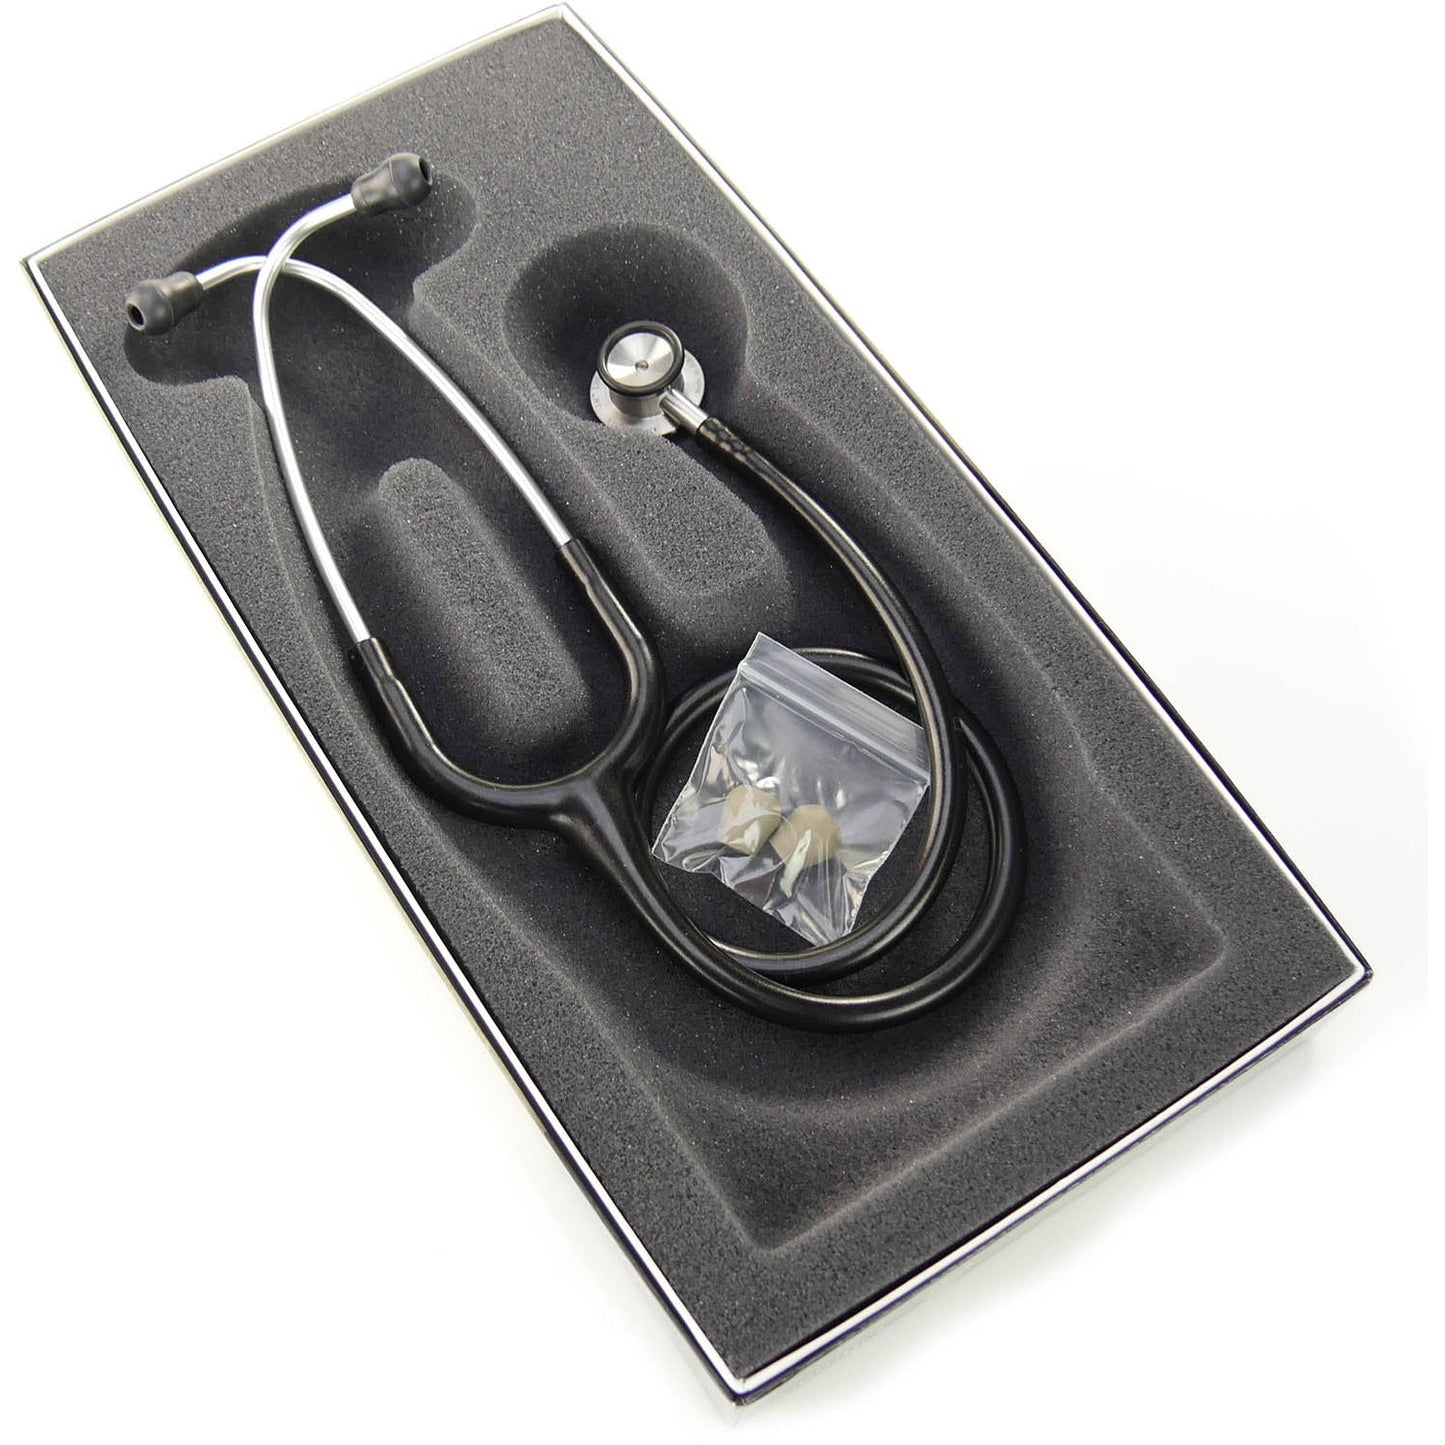 Stetoskop 3M™ Littmann® Classic II Infant, črna cev, 71 cm, 2114